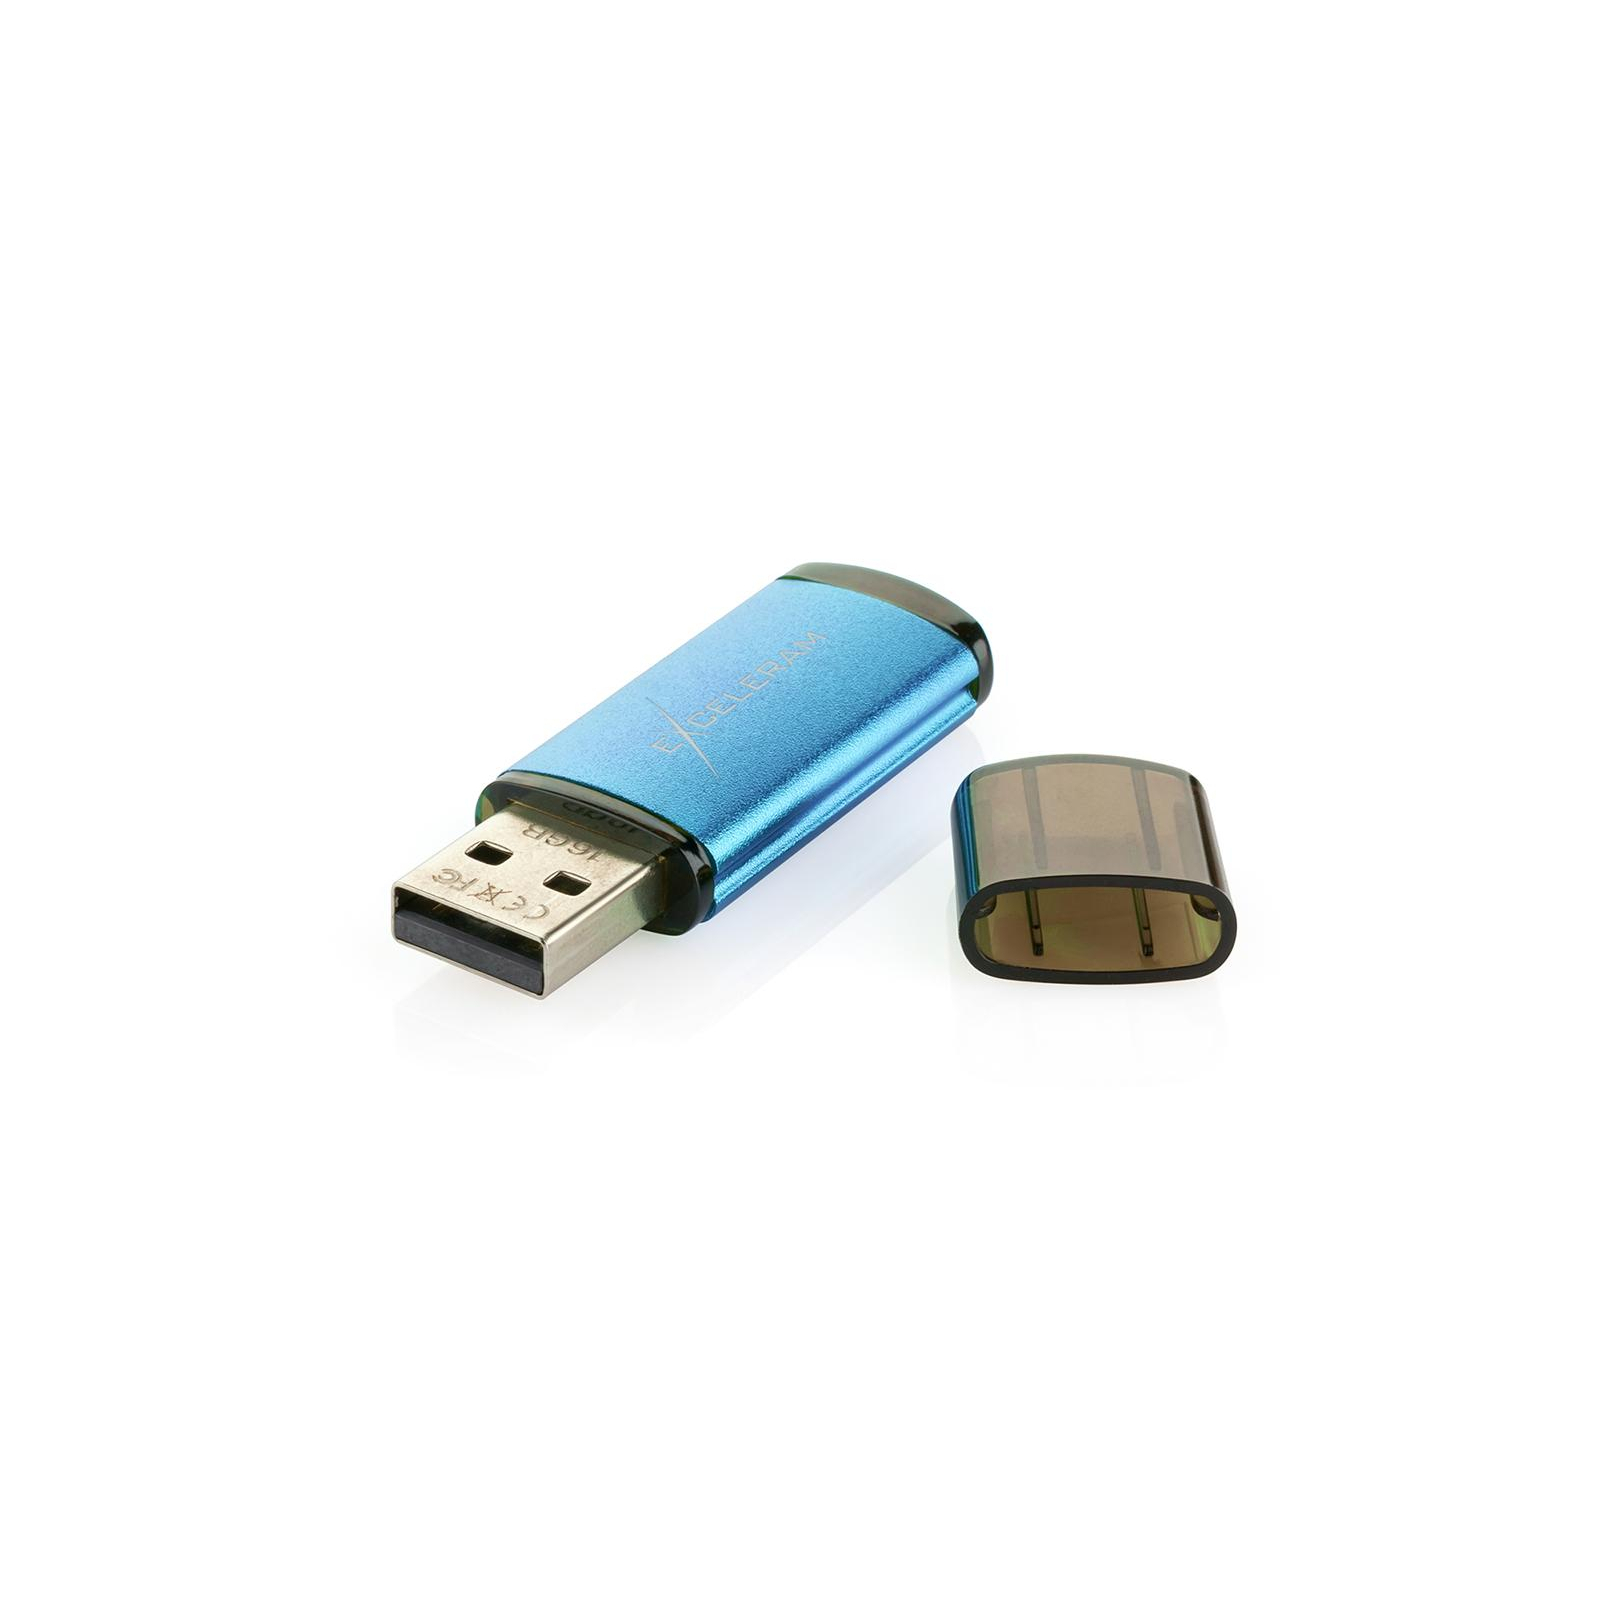 USB флеш накопитель eXceleram 8GB A3 Series Blue USB 2.0 (EXA3U2BL08) изображение 5